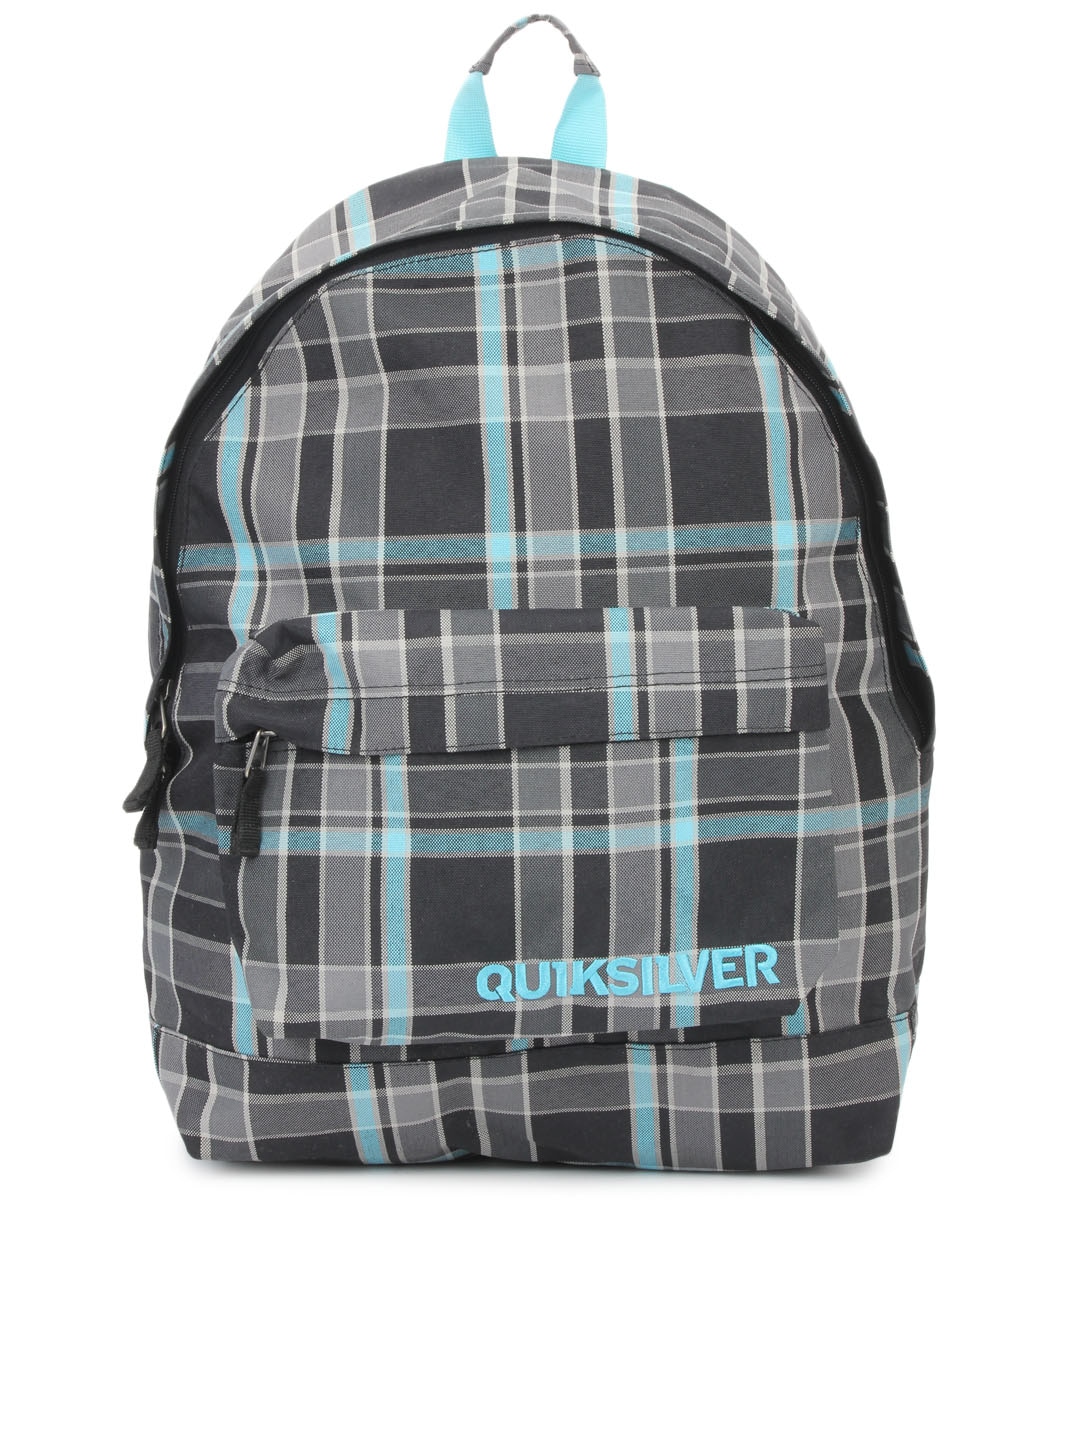 Quiksilver Unisex Black Backpack